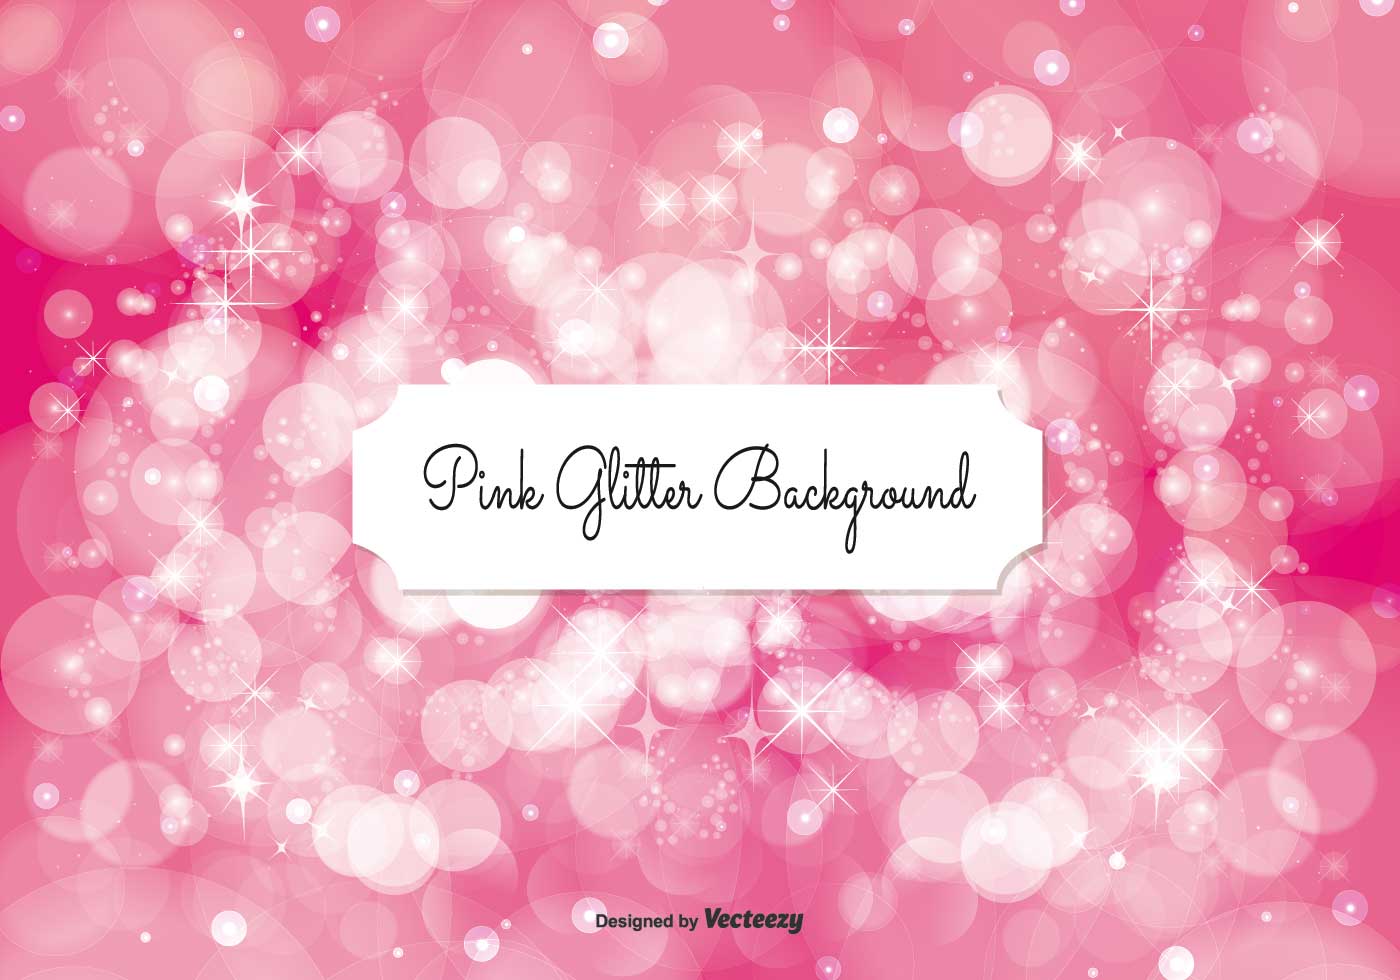 Pink Glitter Background Illustration Free Vector Art